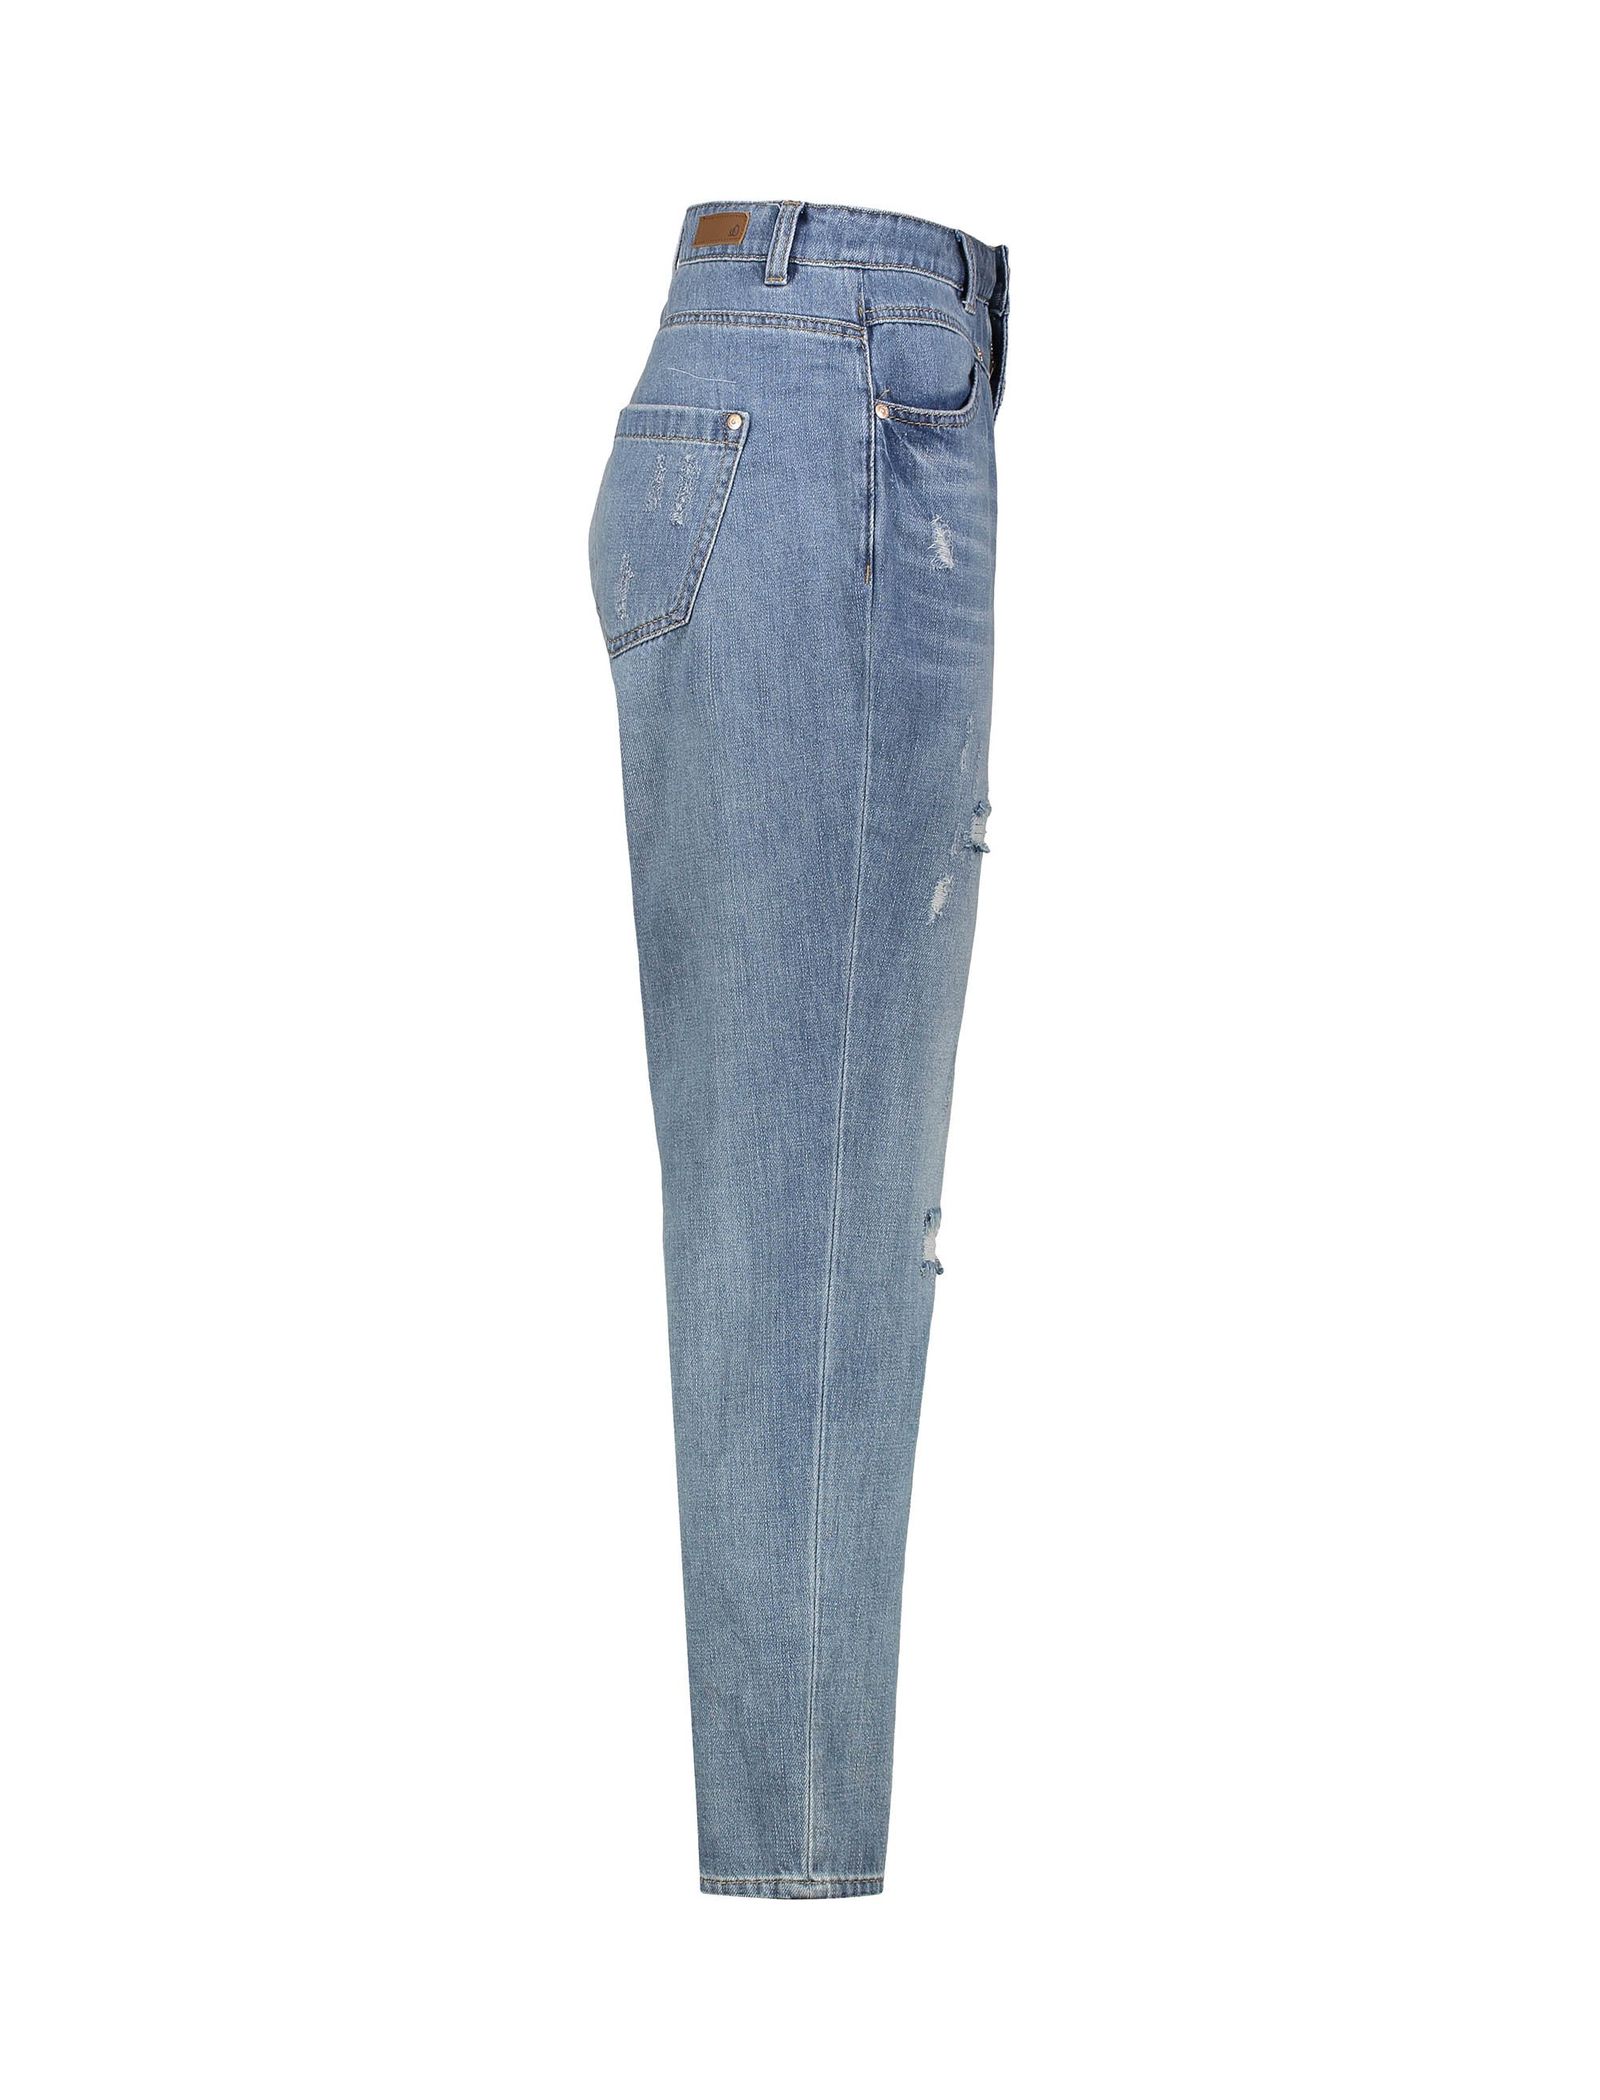 شلوار جین زنانه اس.اولیور مدل 14-701-71-3891 - آبی - 4